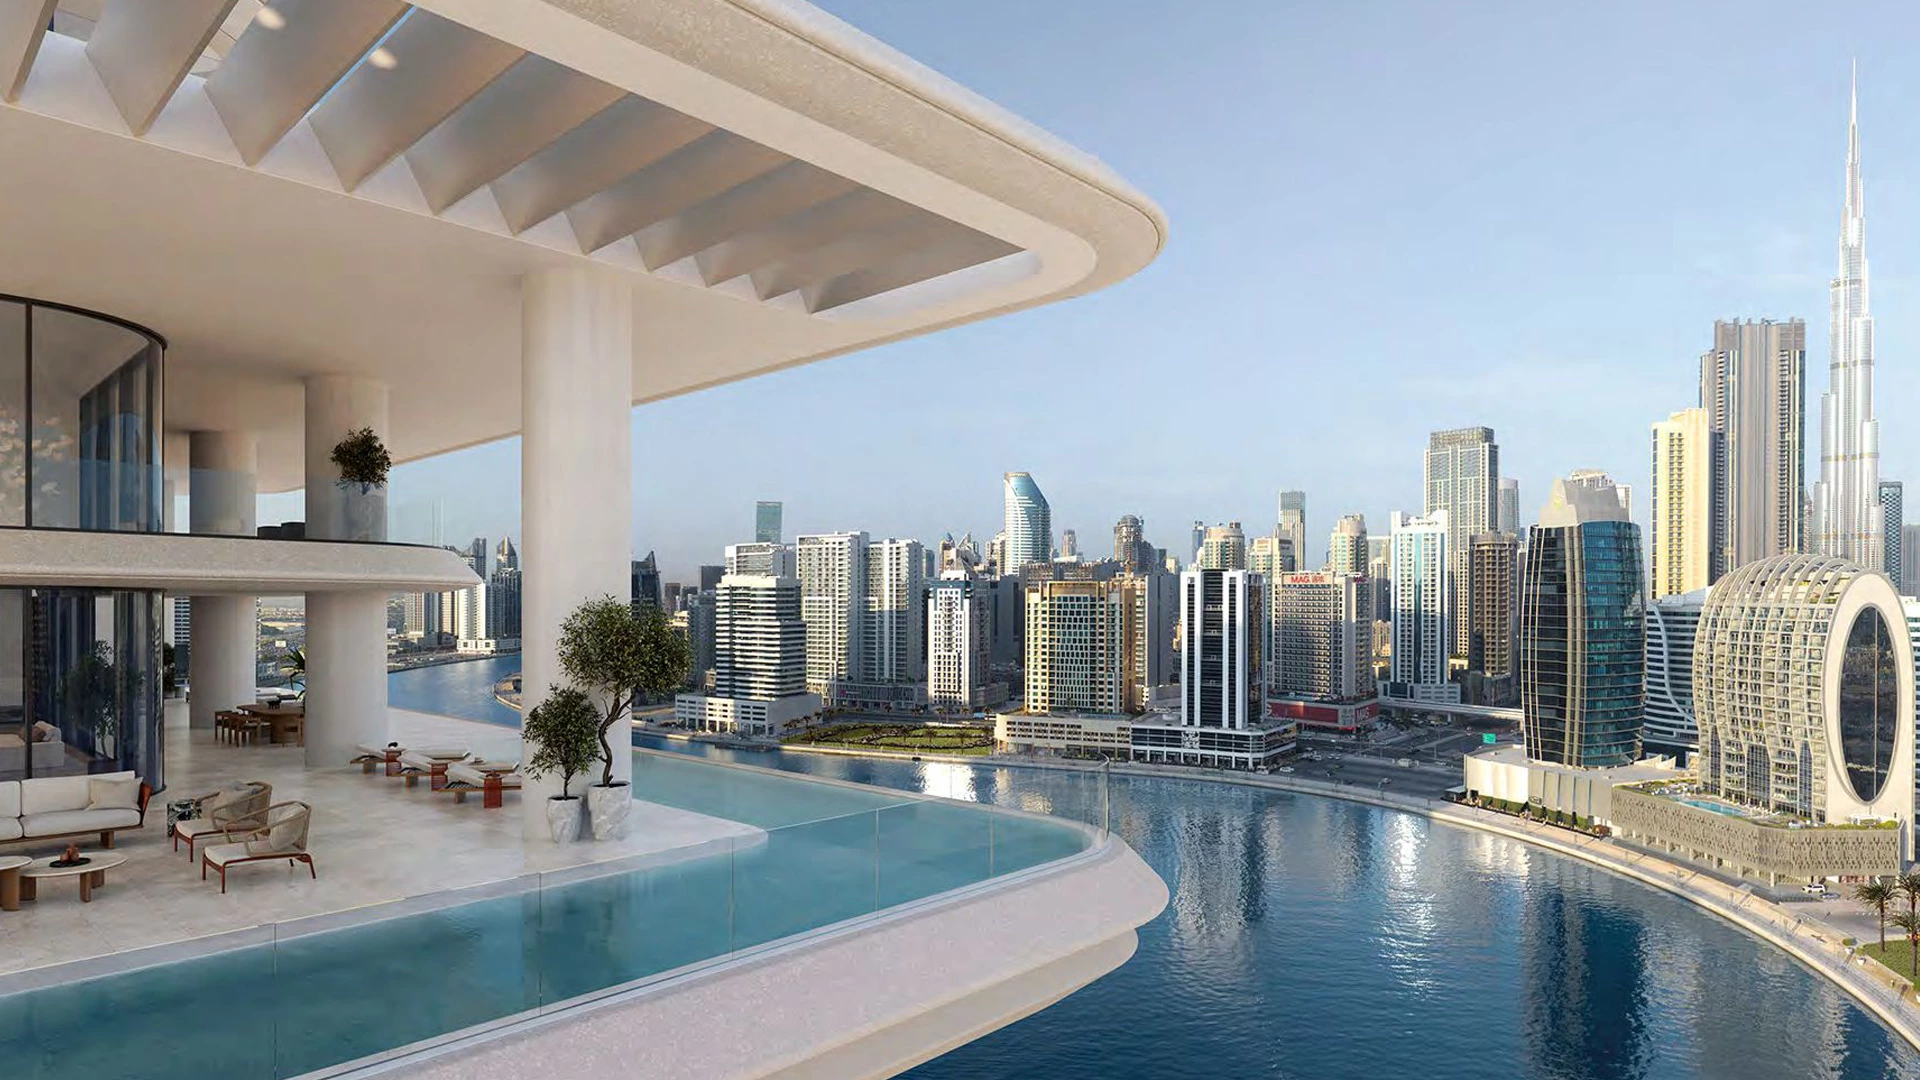 Edge-Realty-للبيع شقة 3 غرف على الواجهة البحرية في فيلا ريزيدنس - دبي